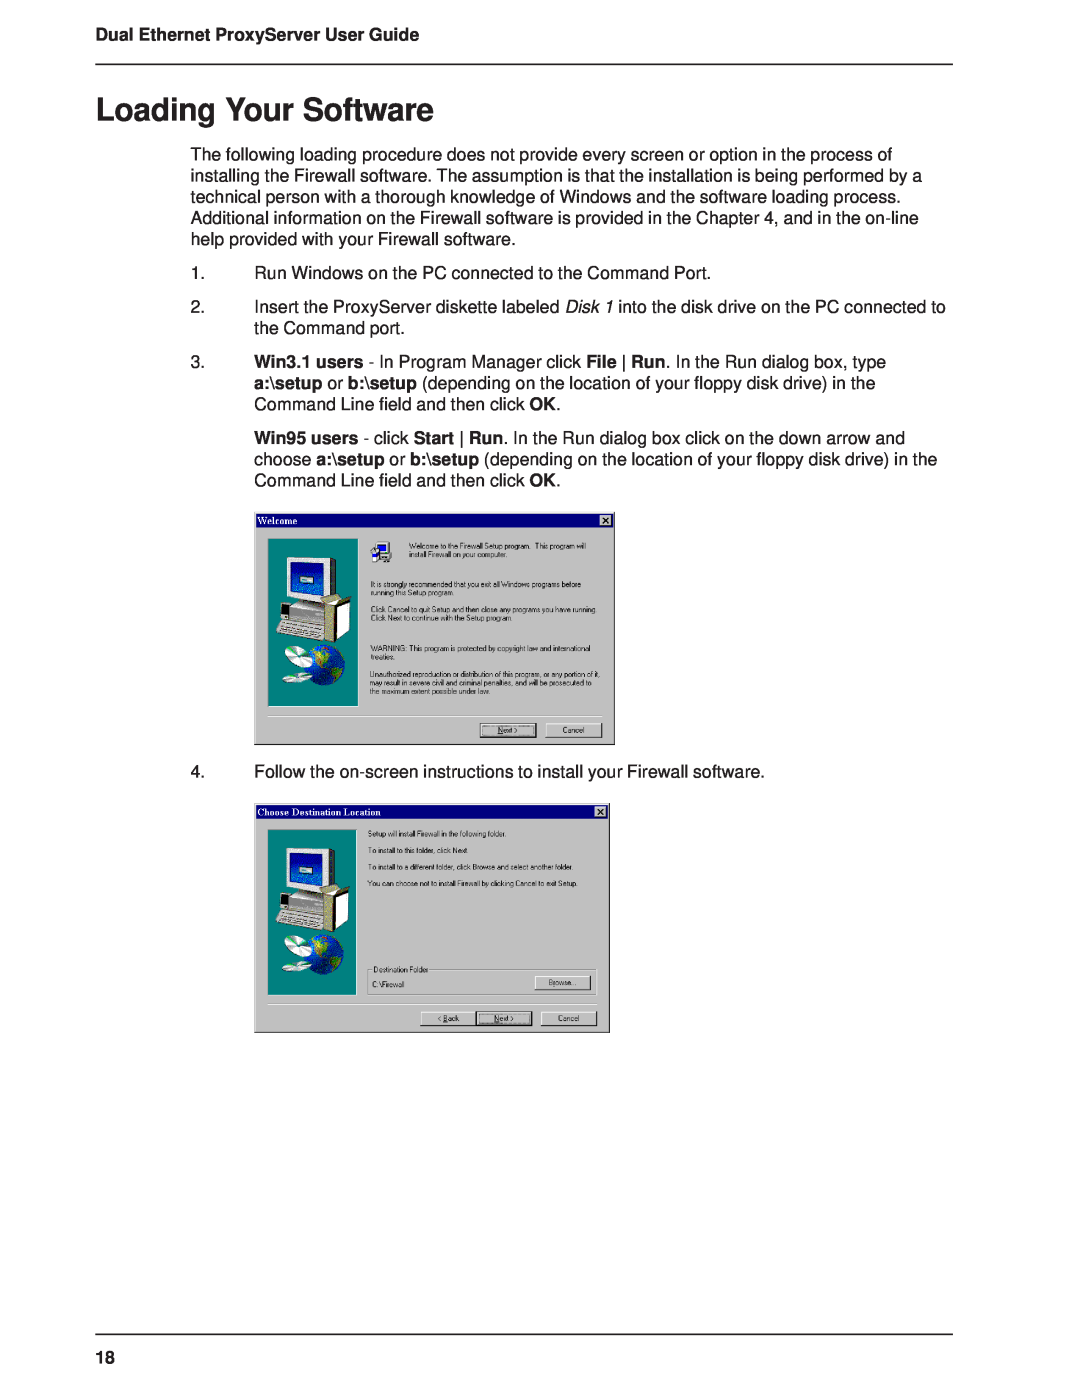 Multitech MTPSR1-120 manual Loading Your Software, Dual Ethernet ProxyServer User Guide 